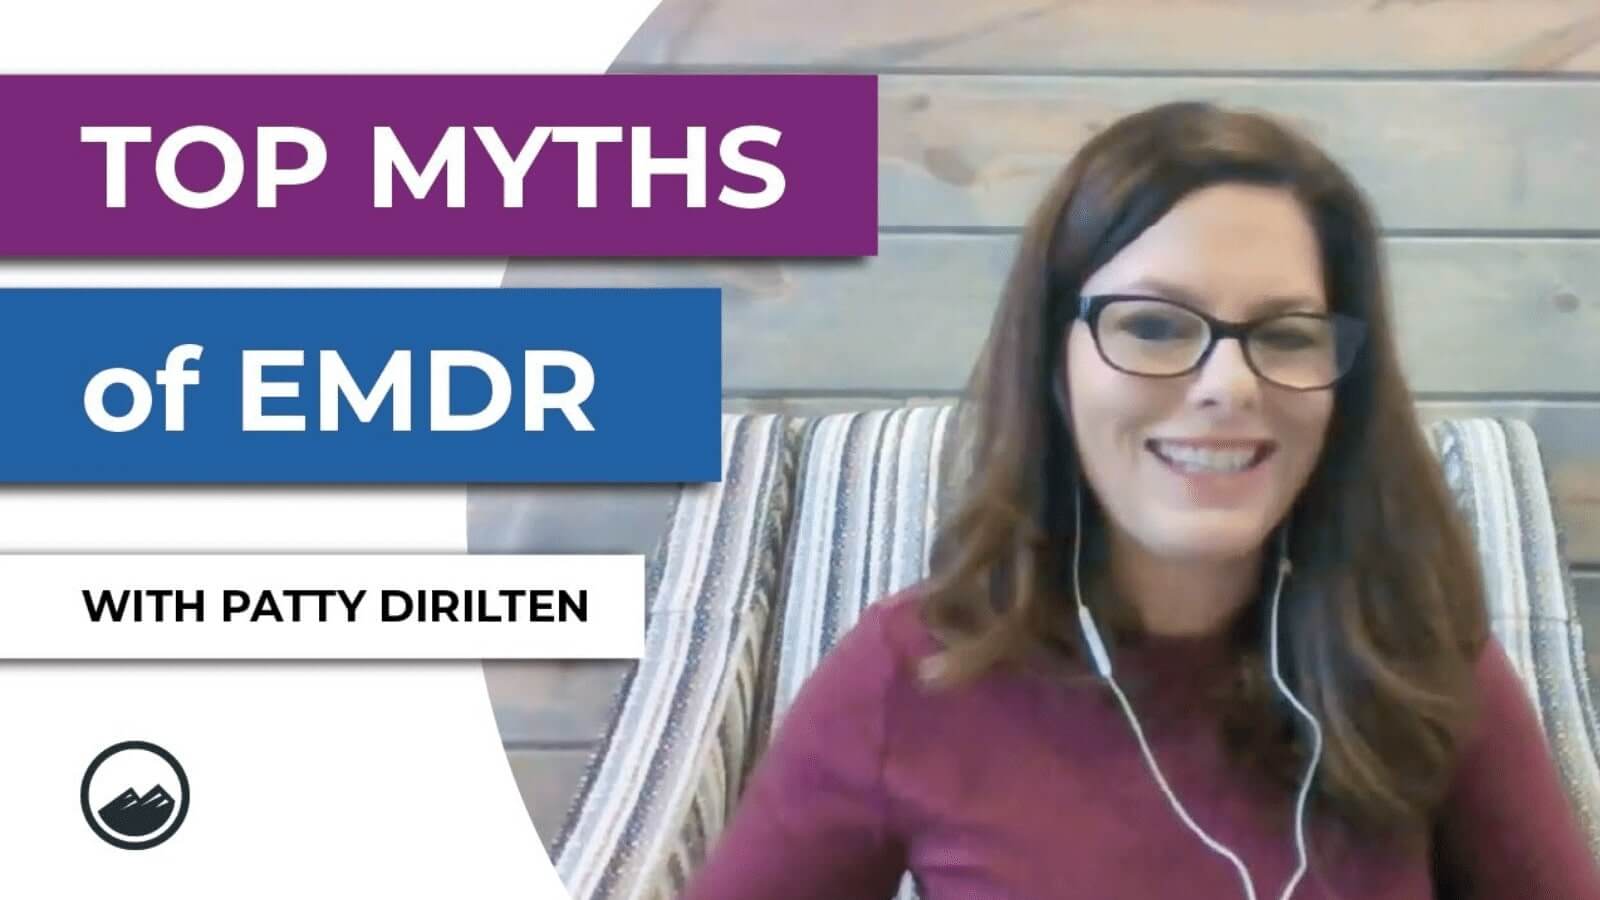 Top myths of EMDR with Patty Dirilten